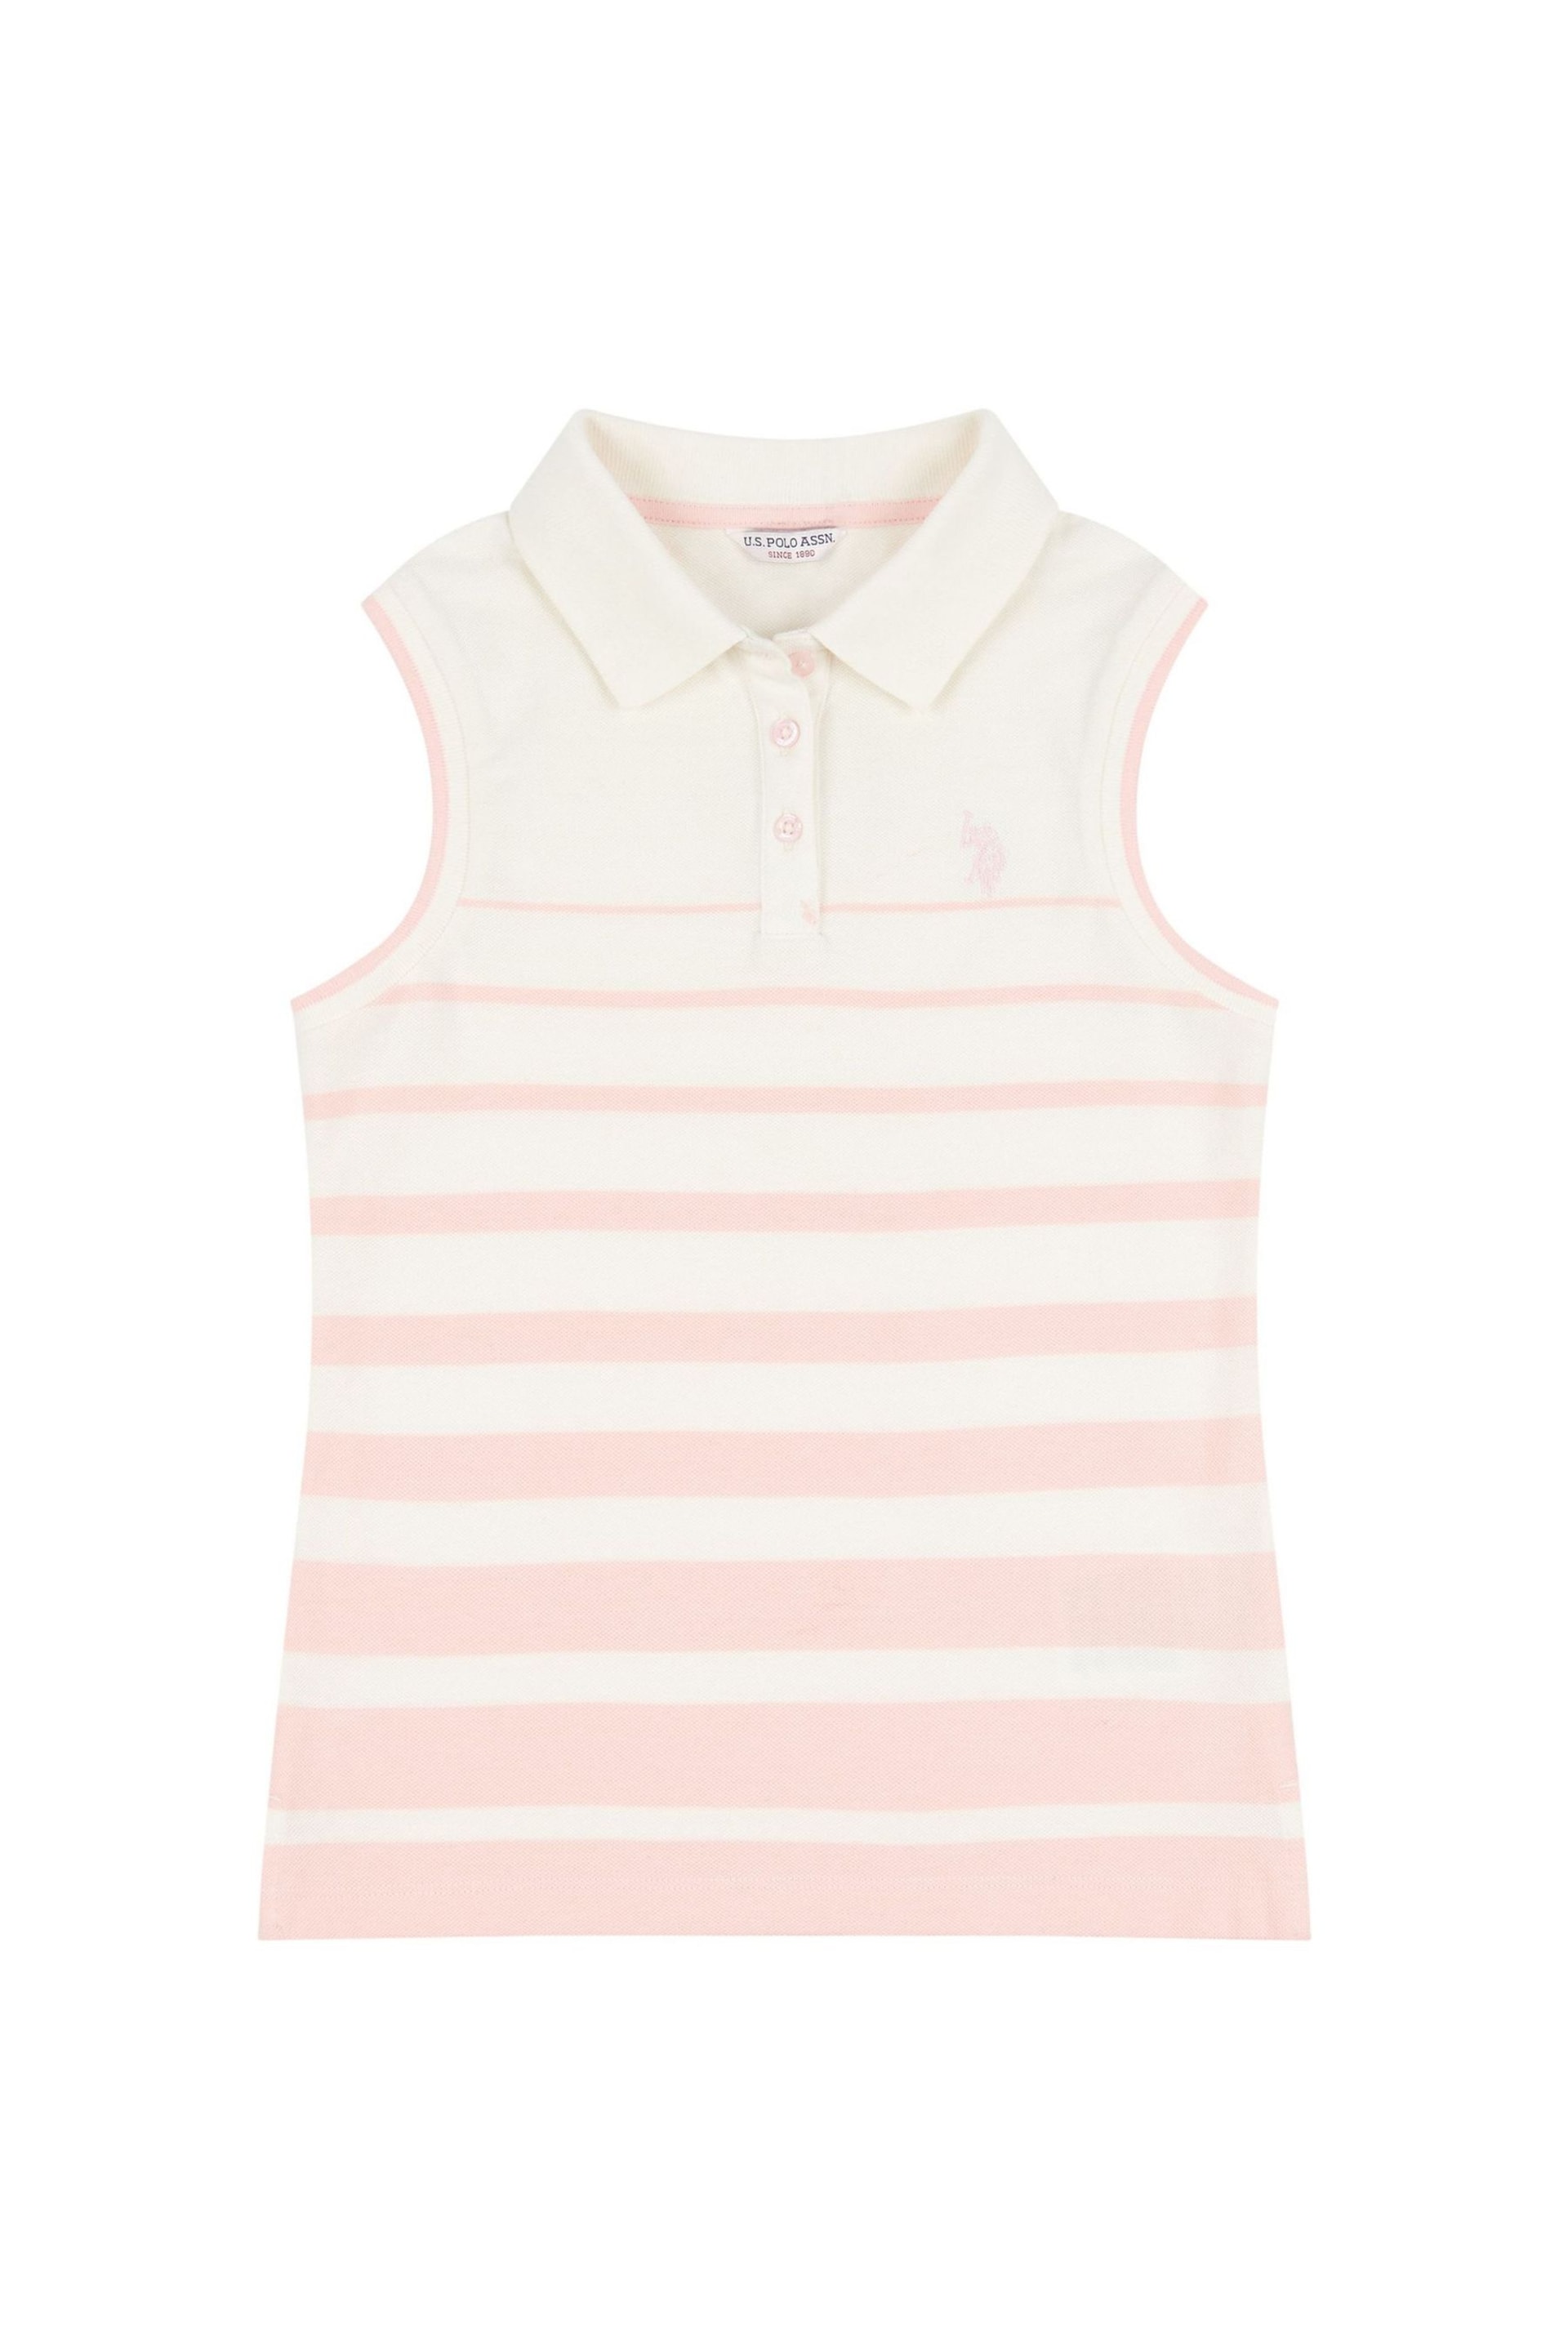 U.S. Polo Assn. Girls Natural Stripe Sleeveless Polo Shirt - Image 1 of 2